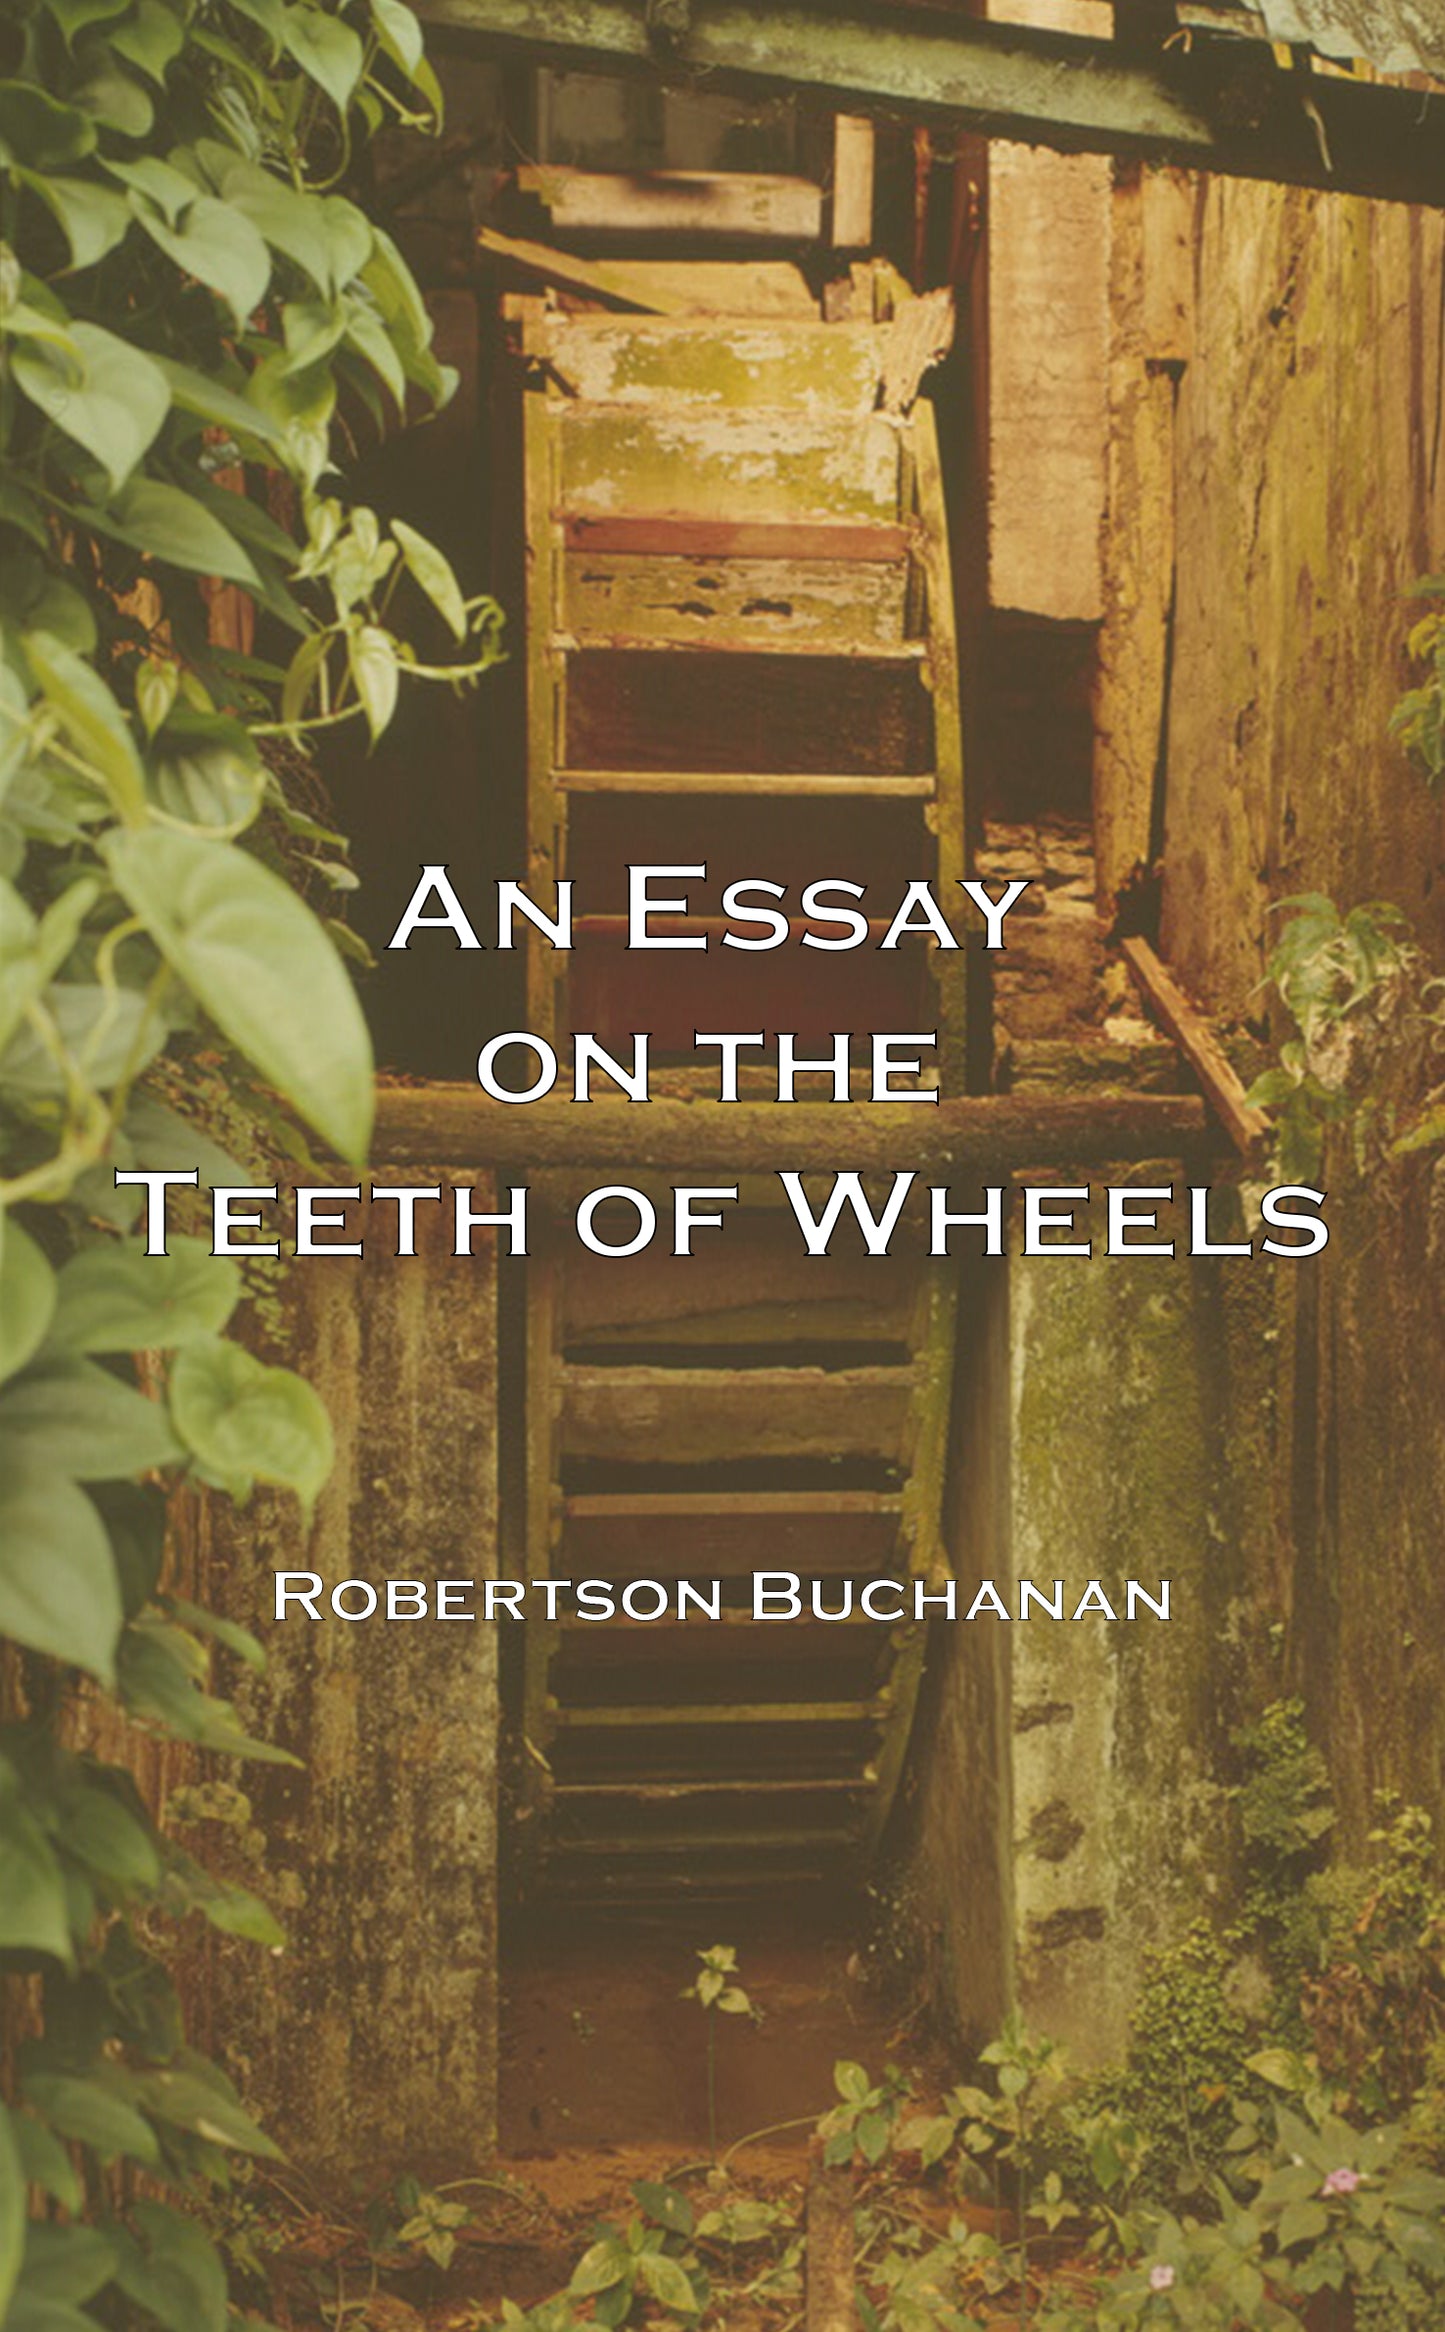 An Essay on the Teeth of Wheels